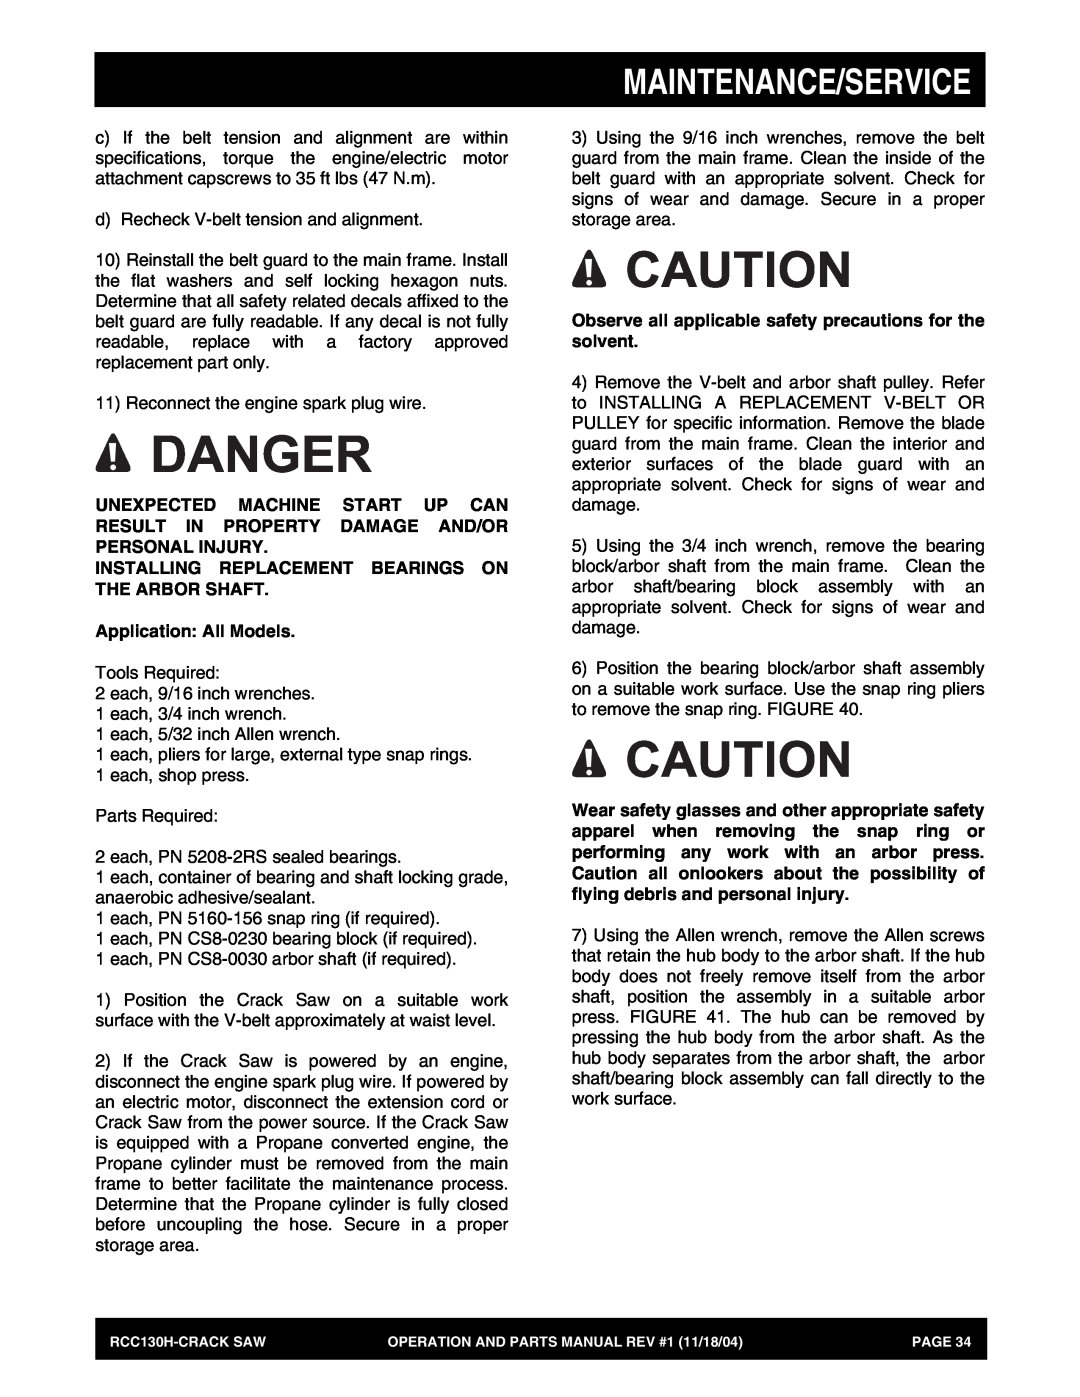 Stow RCC130H manual Danger, Maintenance/Service 